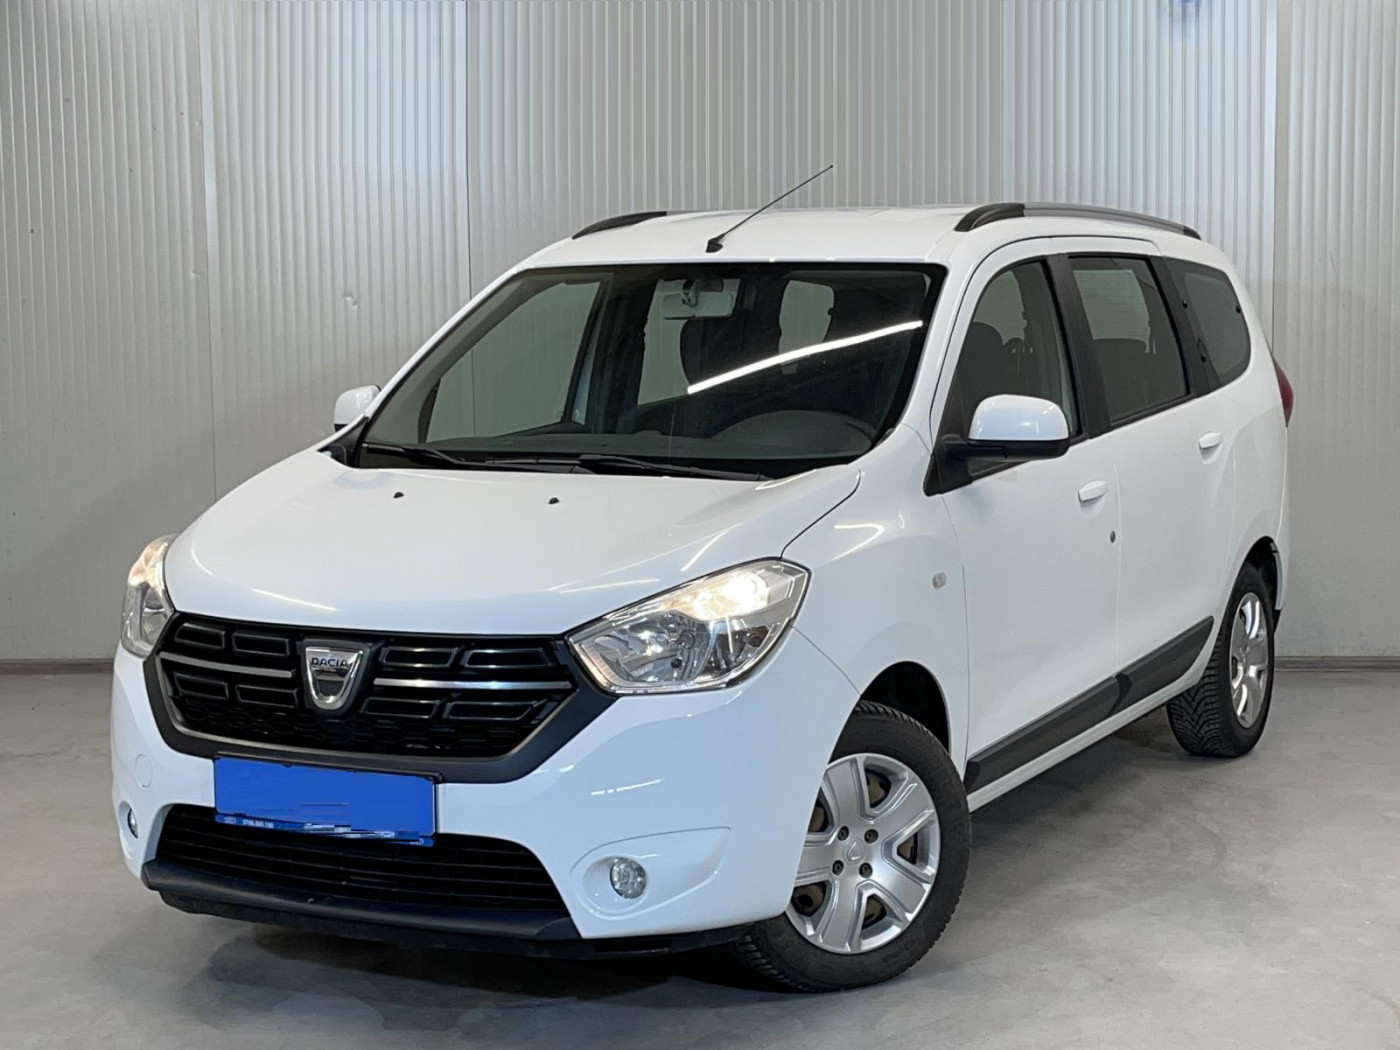 Dacia Lodgy  109 CP   - 12990 €,   162890 km,  anul 2017,  culoare alb 